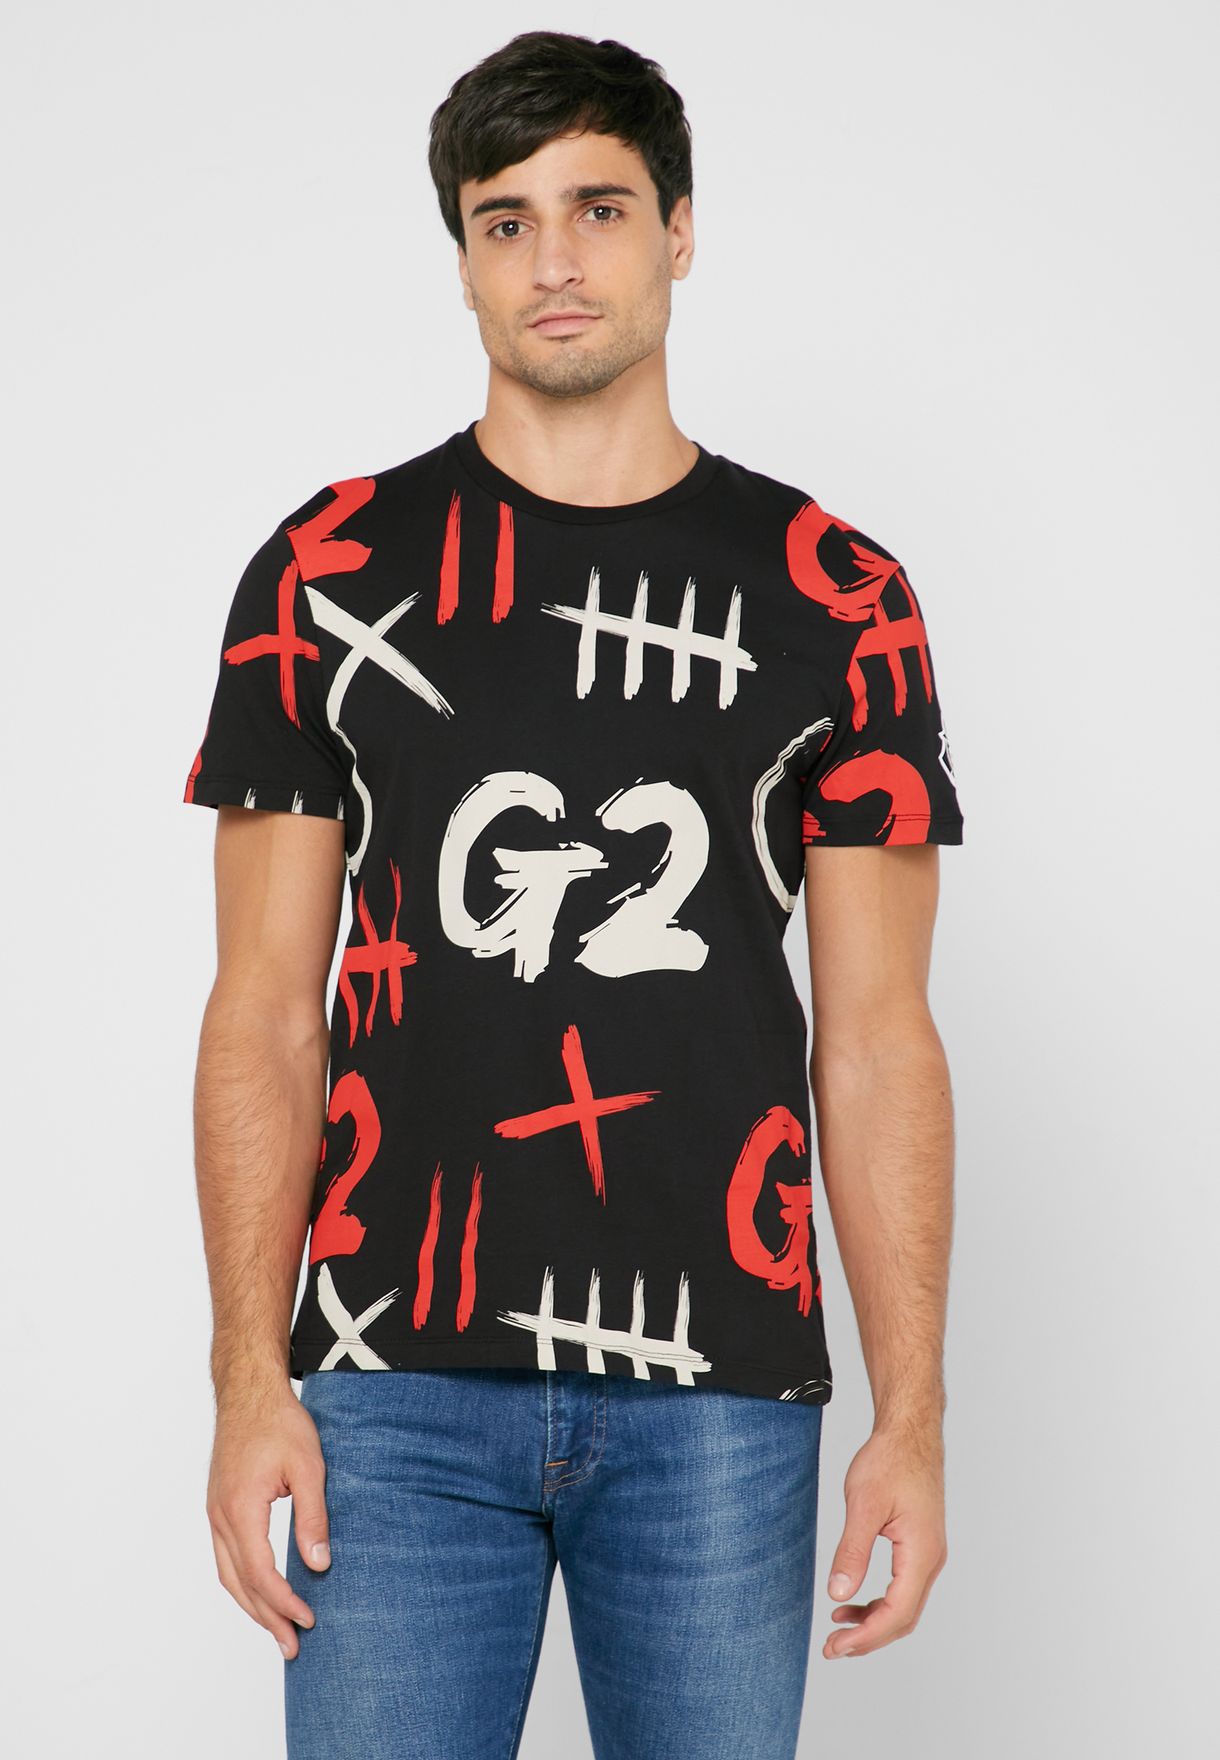 G2 Esports Crew Neck T-Shirt